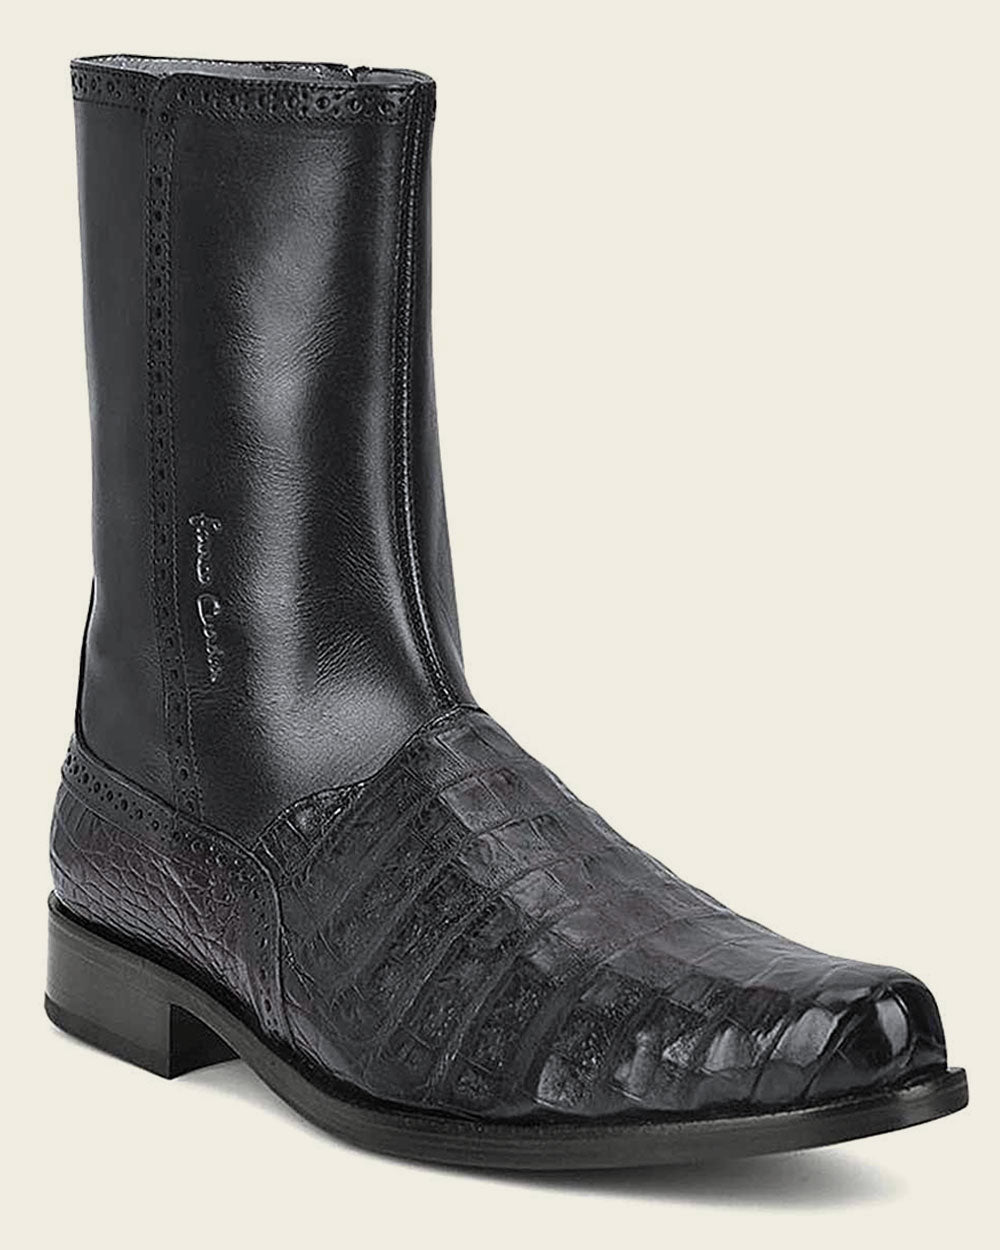 Cayman & bovine leather: Luxury & timeless elegance in black Cuadra boots. 